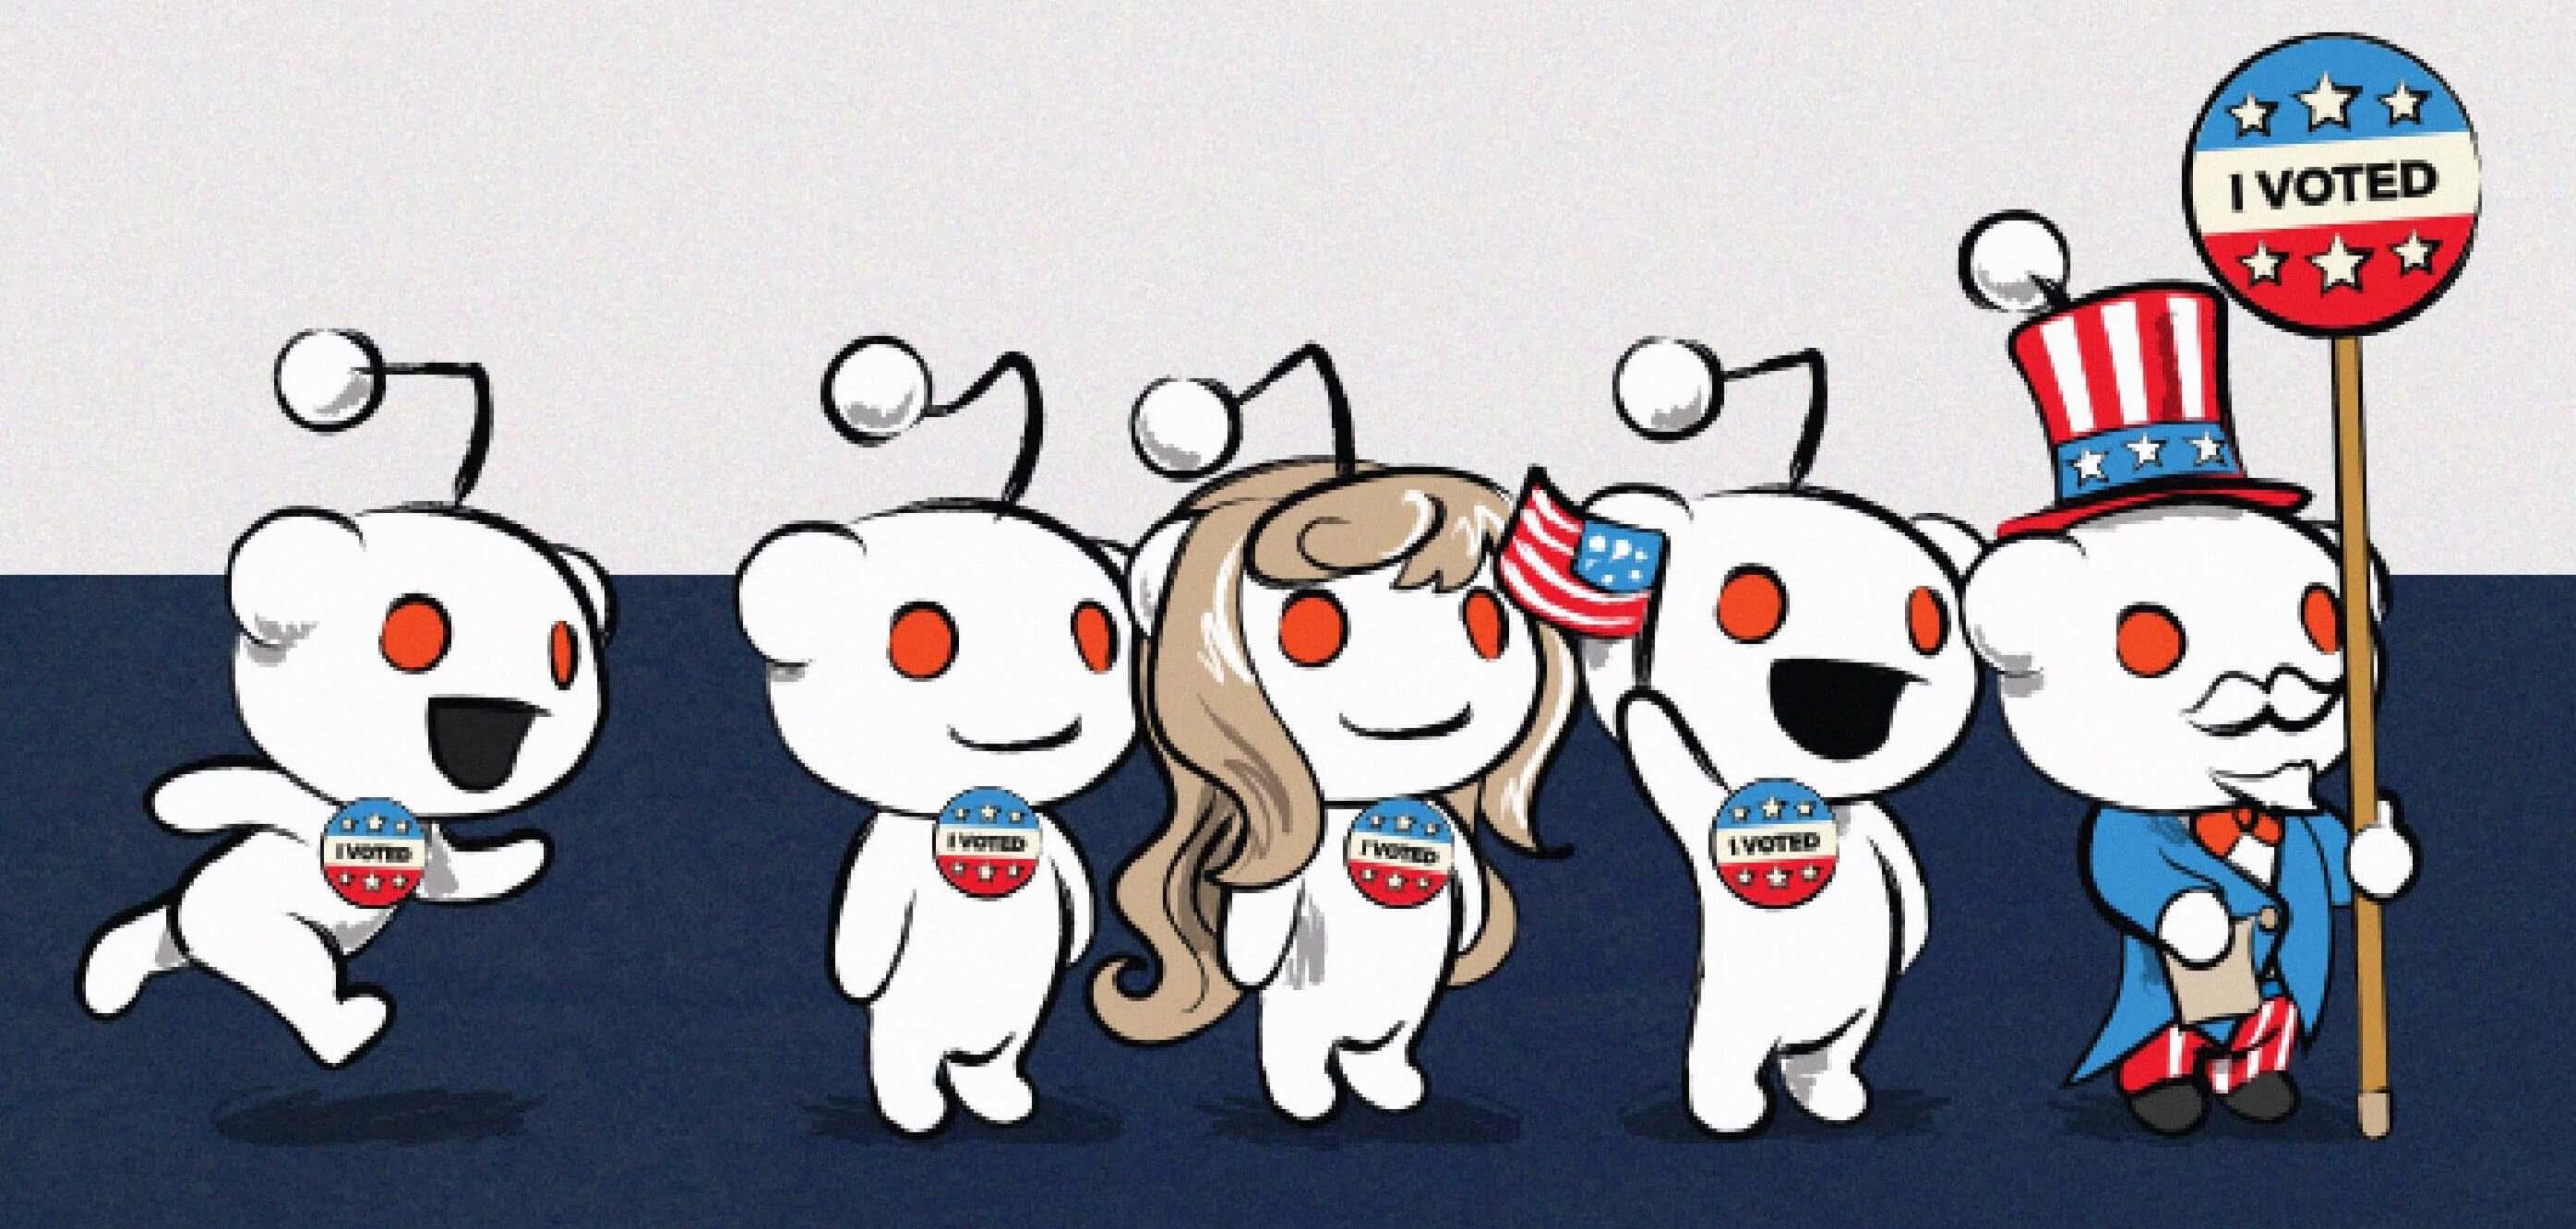 Reddit has made a dedicated subreddit to track political ad spending on its platform